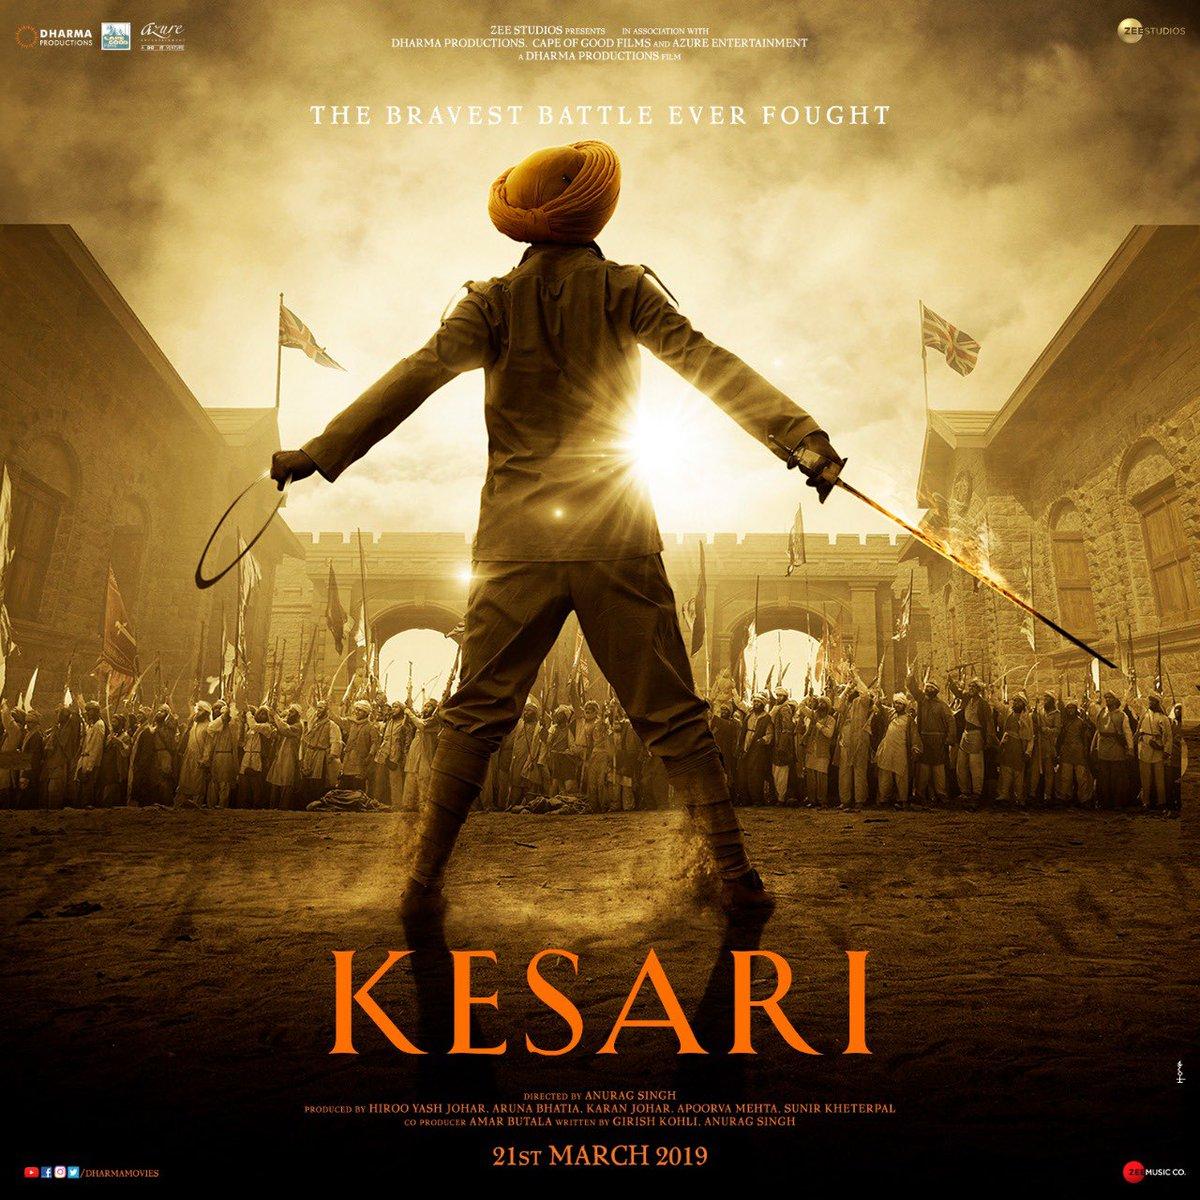 Kesari Photo: HD Image, Picture, Stills, First Look Posters of Kesari Movie